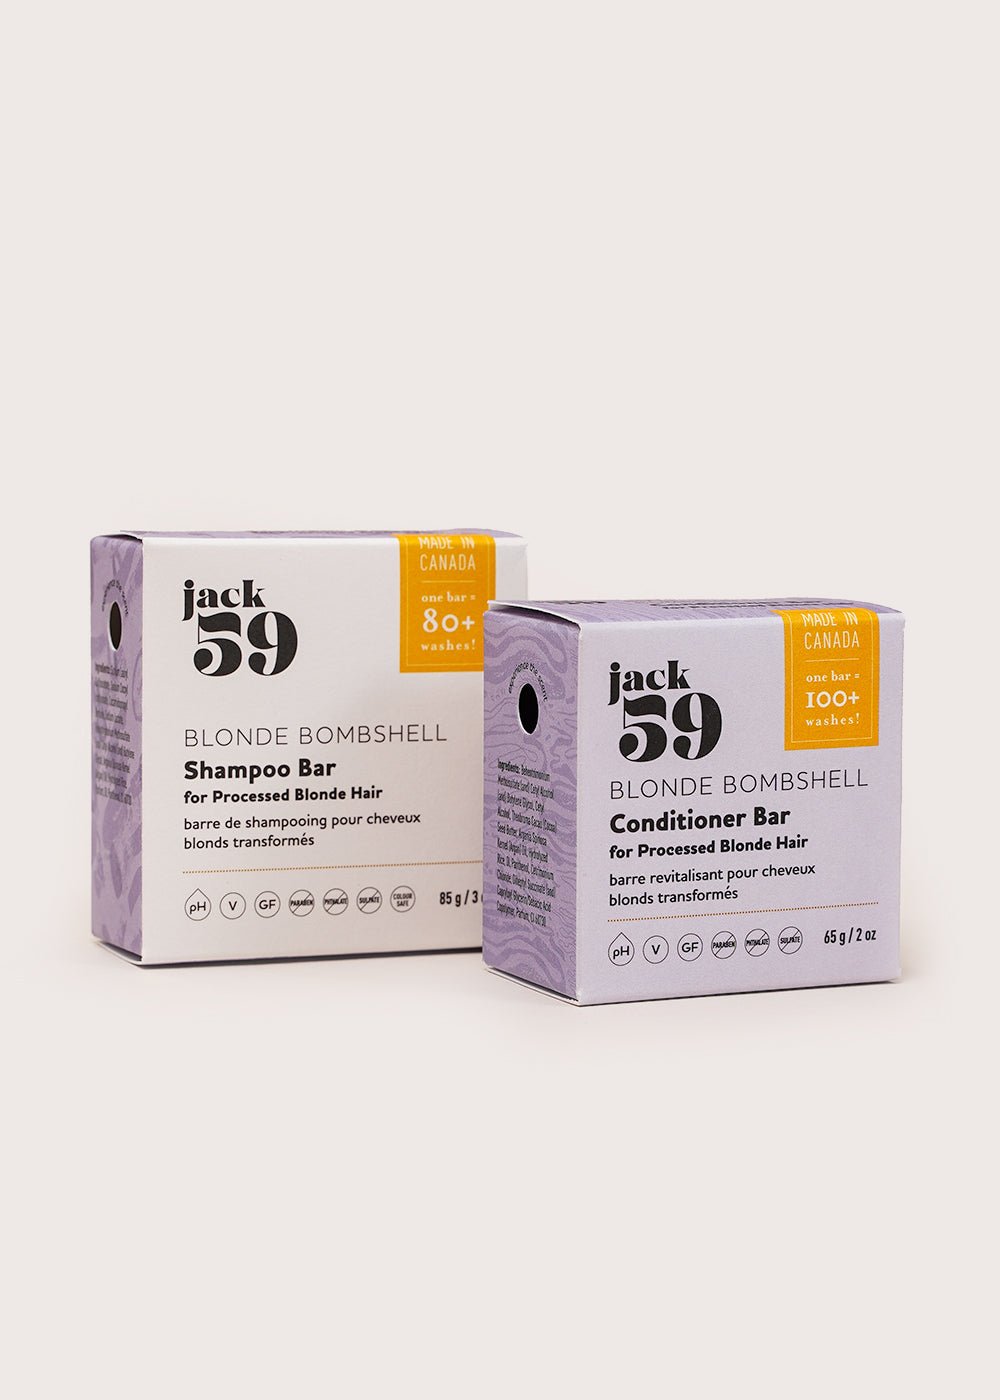 Jack59 Blonde Bombshell Conditioner Bar - New Classics Studios Sustainable Ethical Fashion Canada